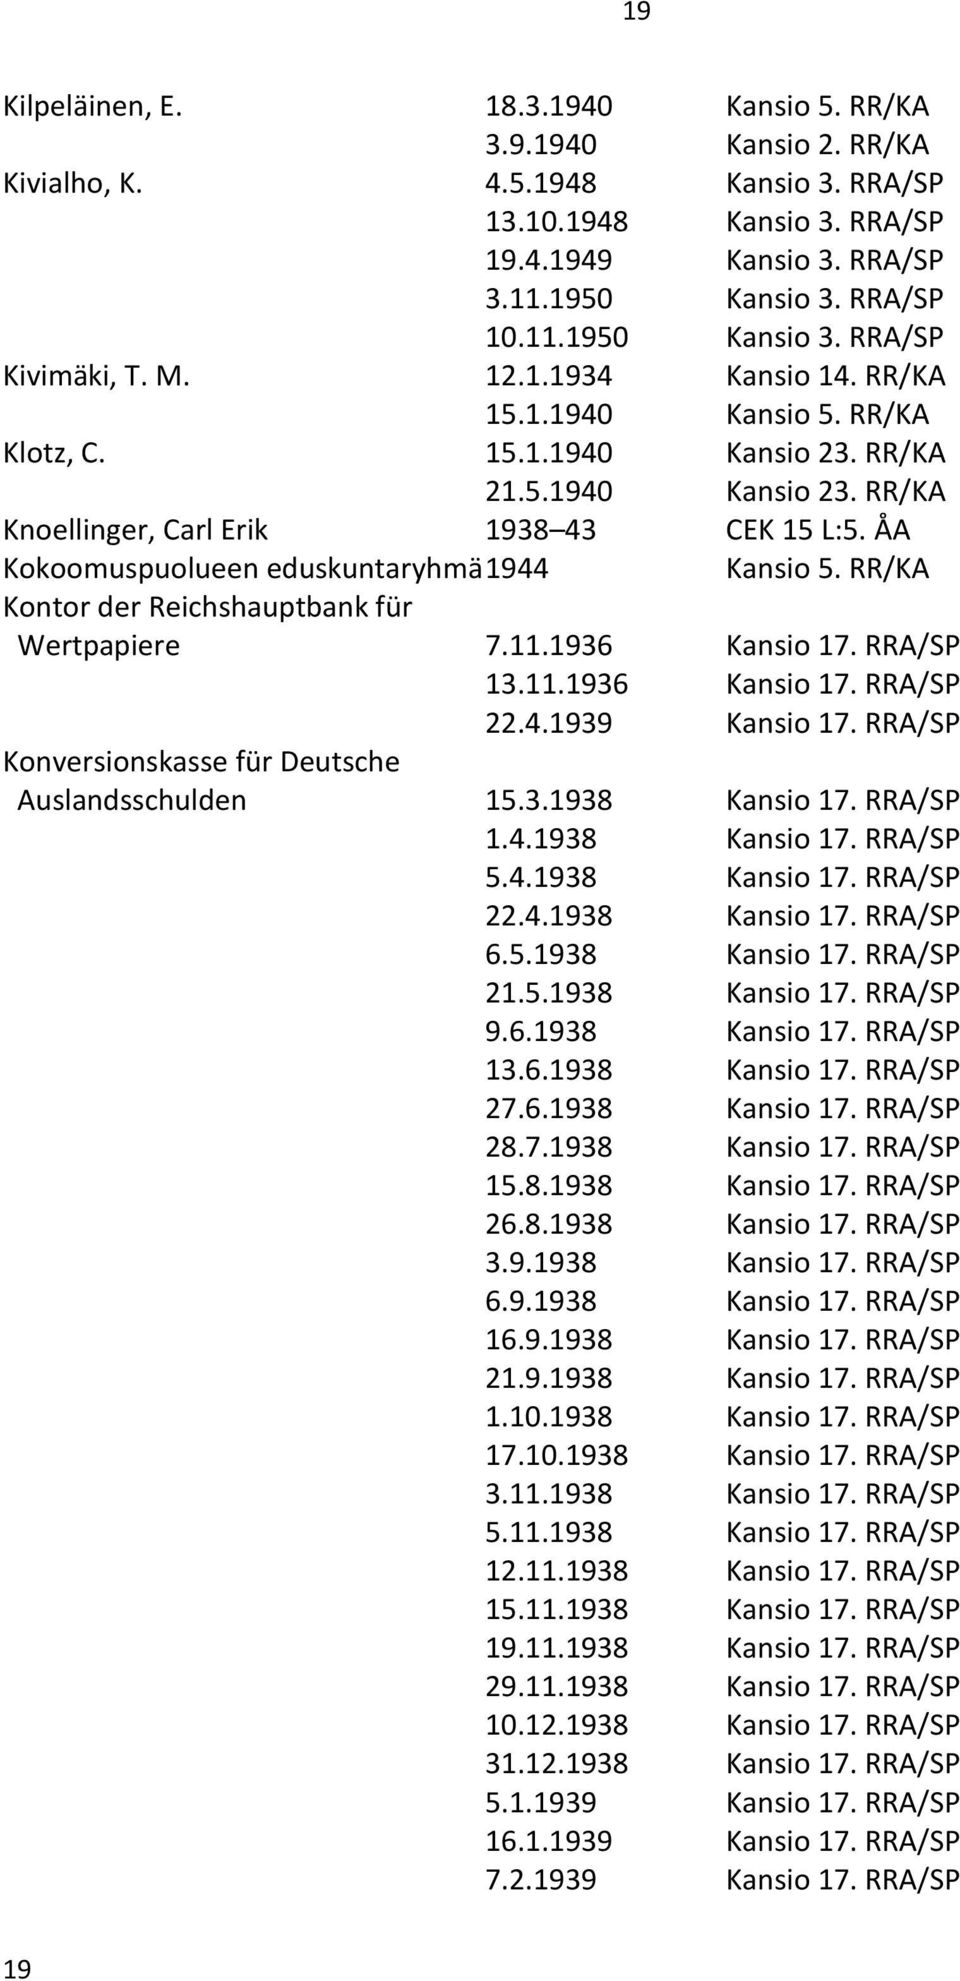 ÅA Kokoomuspuolueen eduskuntaryhmä 1944 Kansio 5. RR/KA Kontor der Reichshauptbank für Wertpapiere 7.11.1936 Kansio 17. RRA/SP 13.11.1936 Kansio 17. RRA/SP 22.4.1939 Kansio 17.